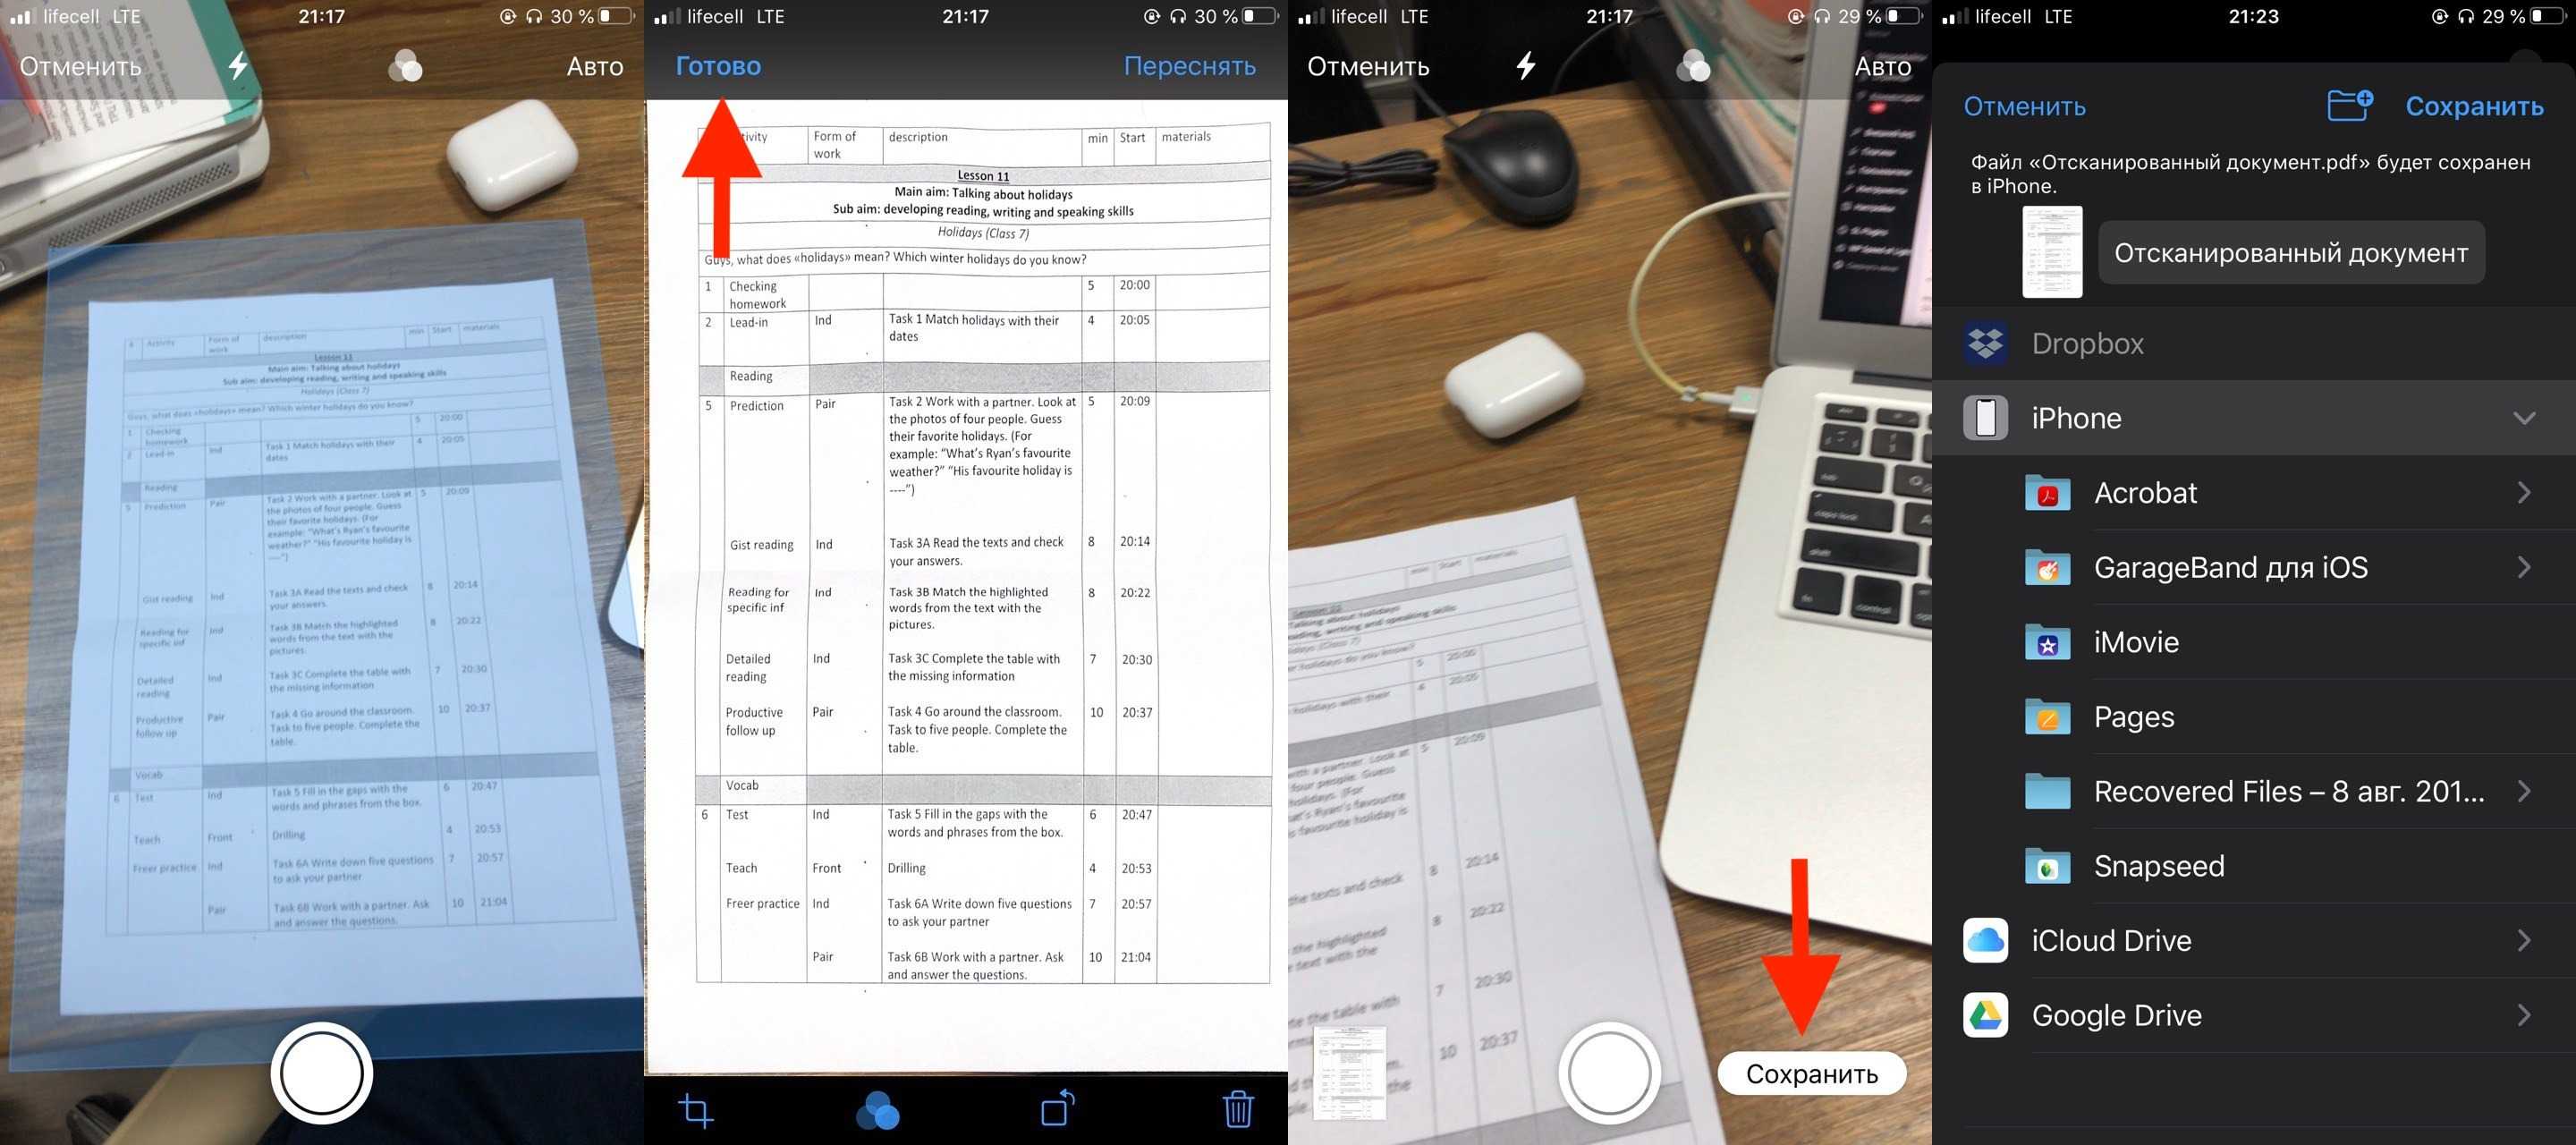 Ios 11: сканер документов и редактор заметок на iphone и ipad — новые возможности заметок